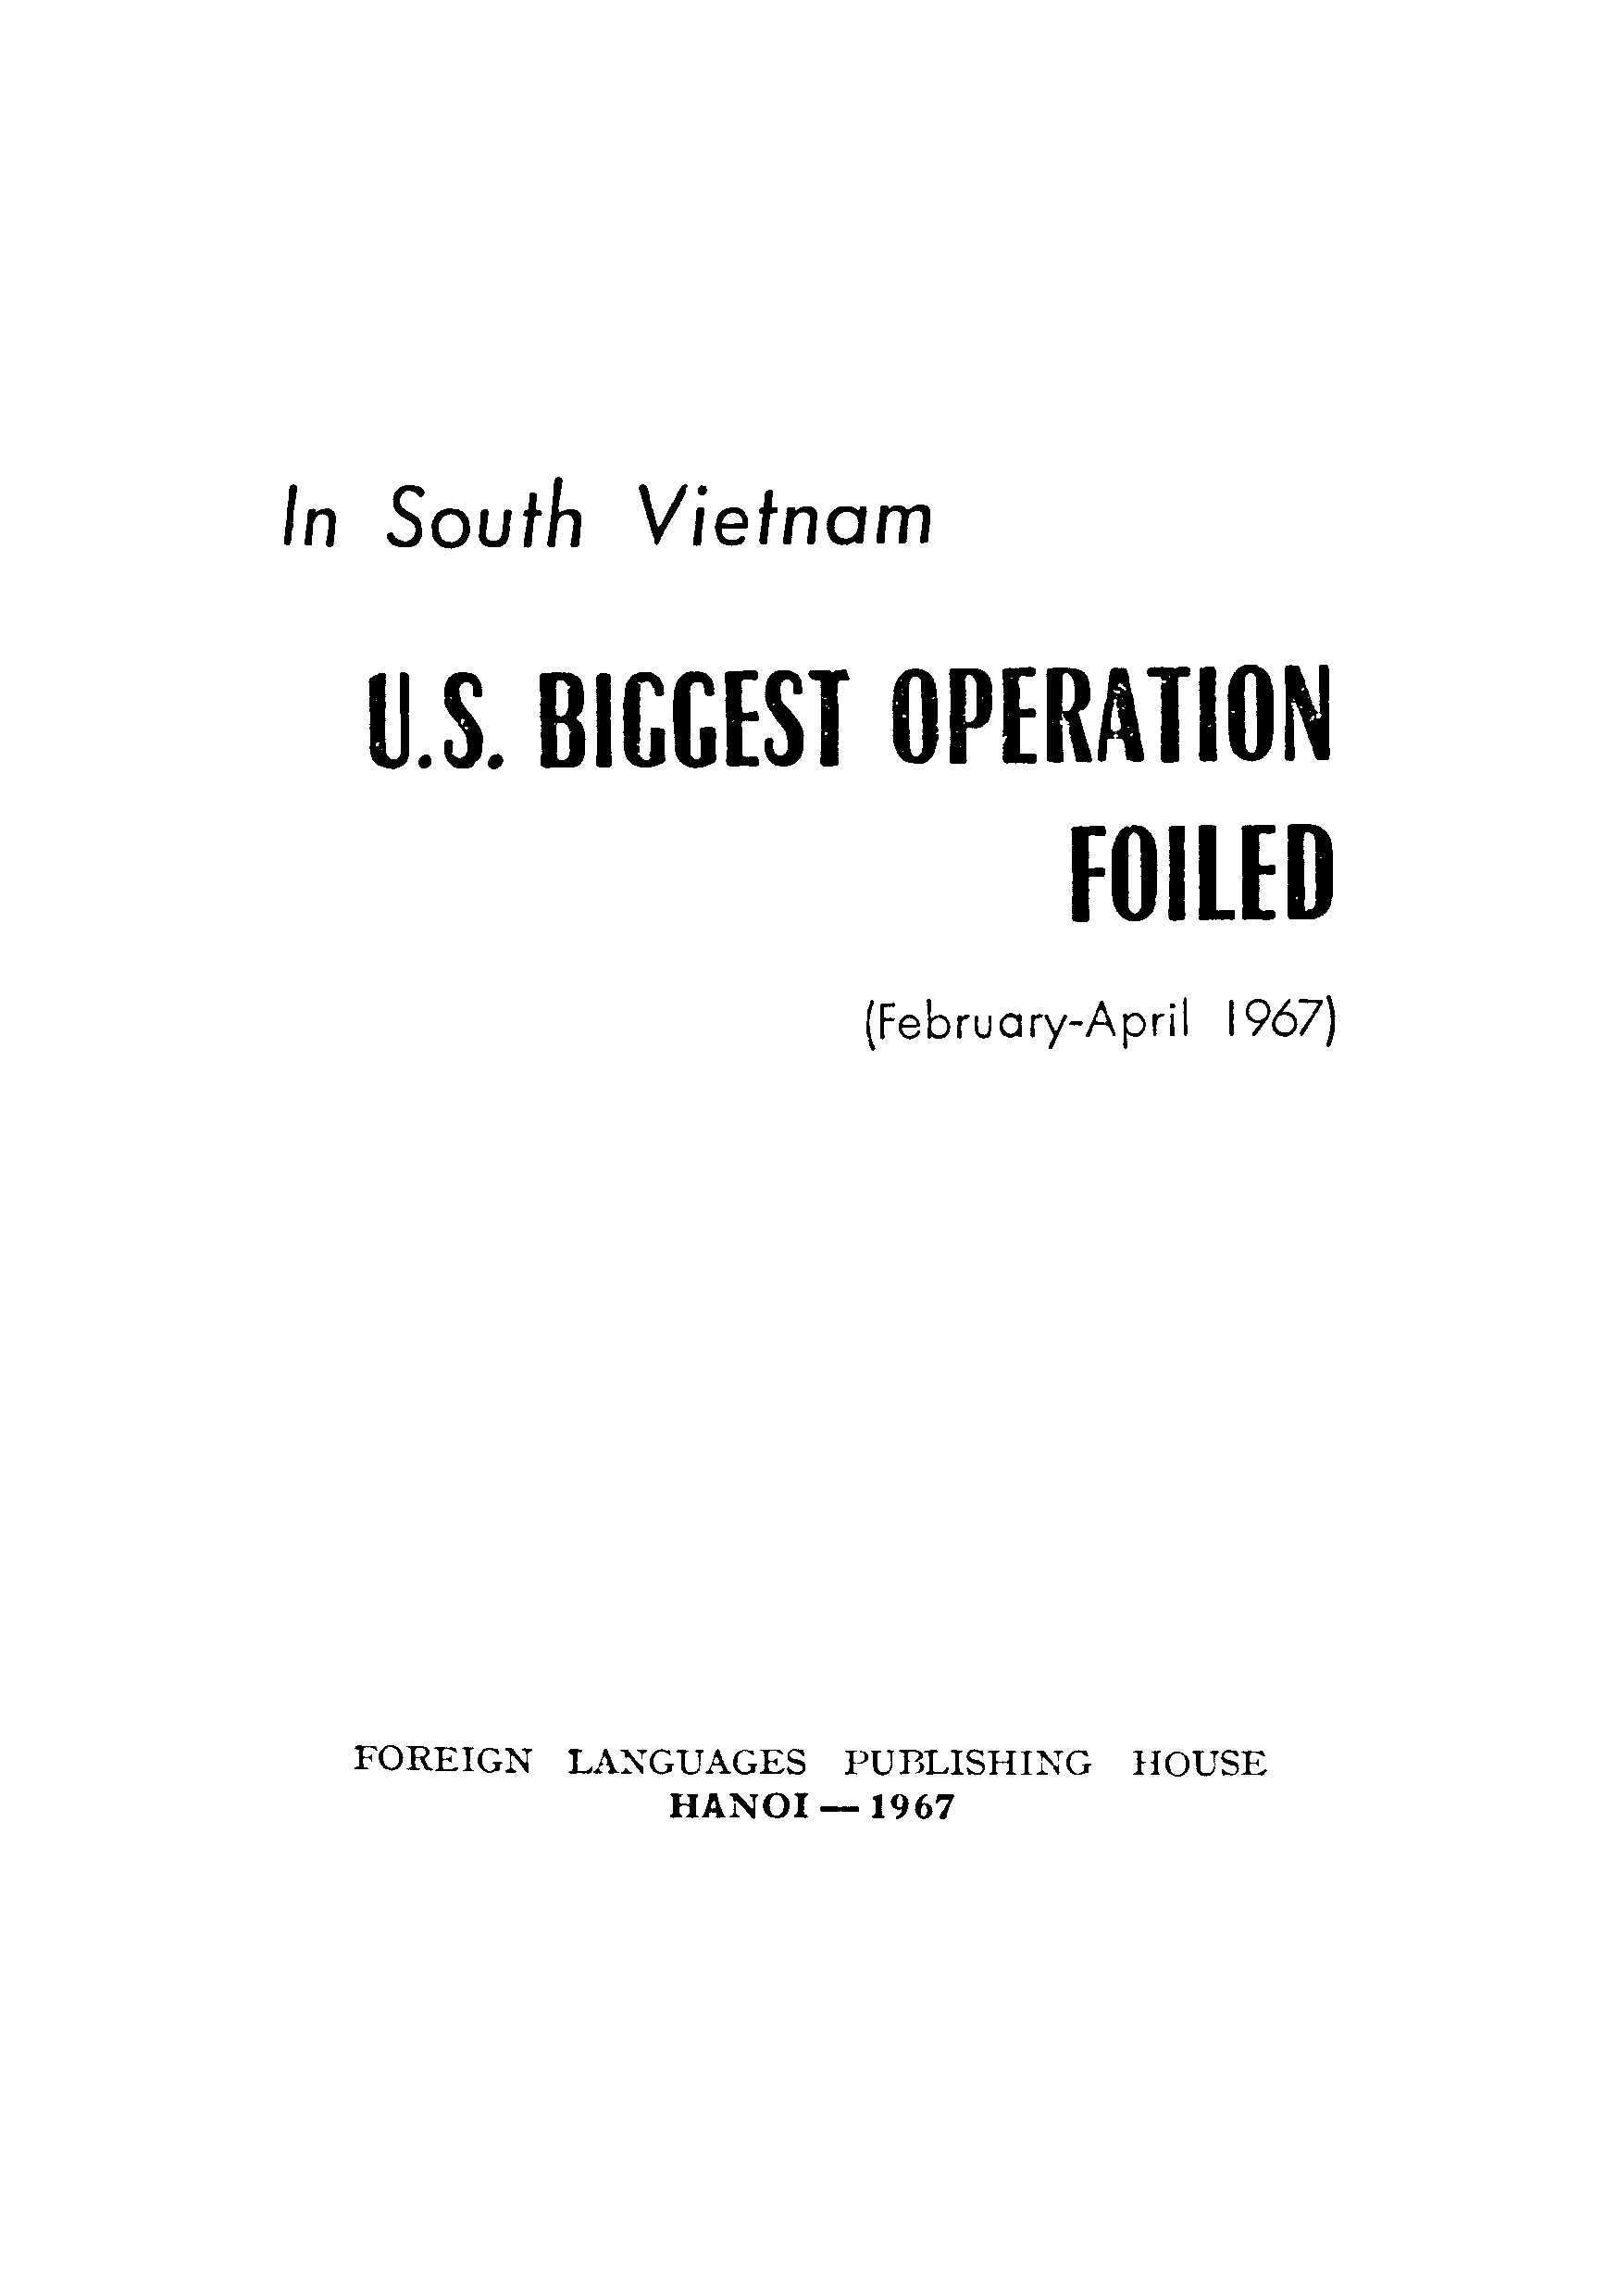 IN sounth vietnam U.S BIGGEST OPERATION FOILED (february-april-1967)